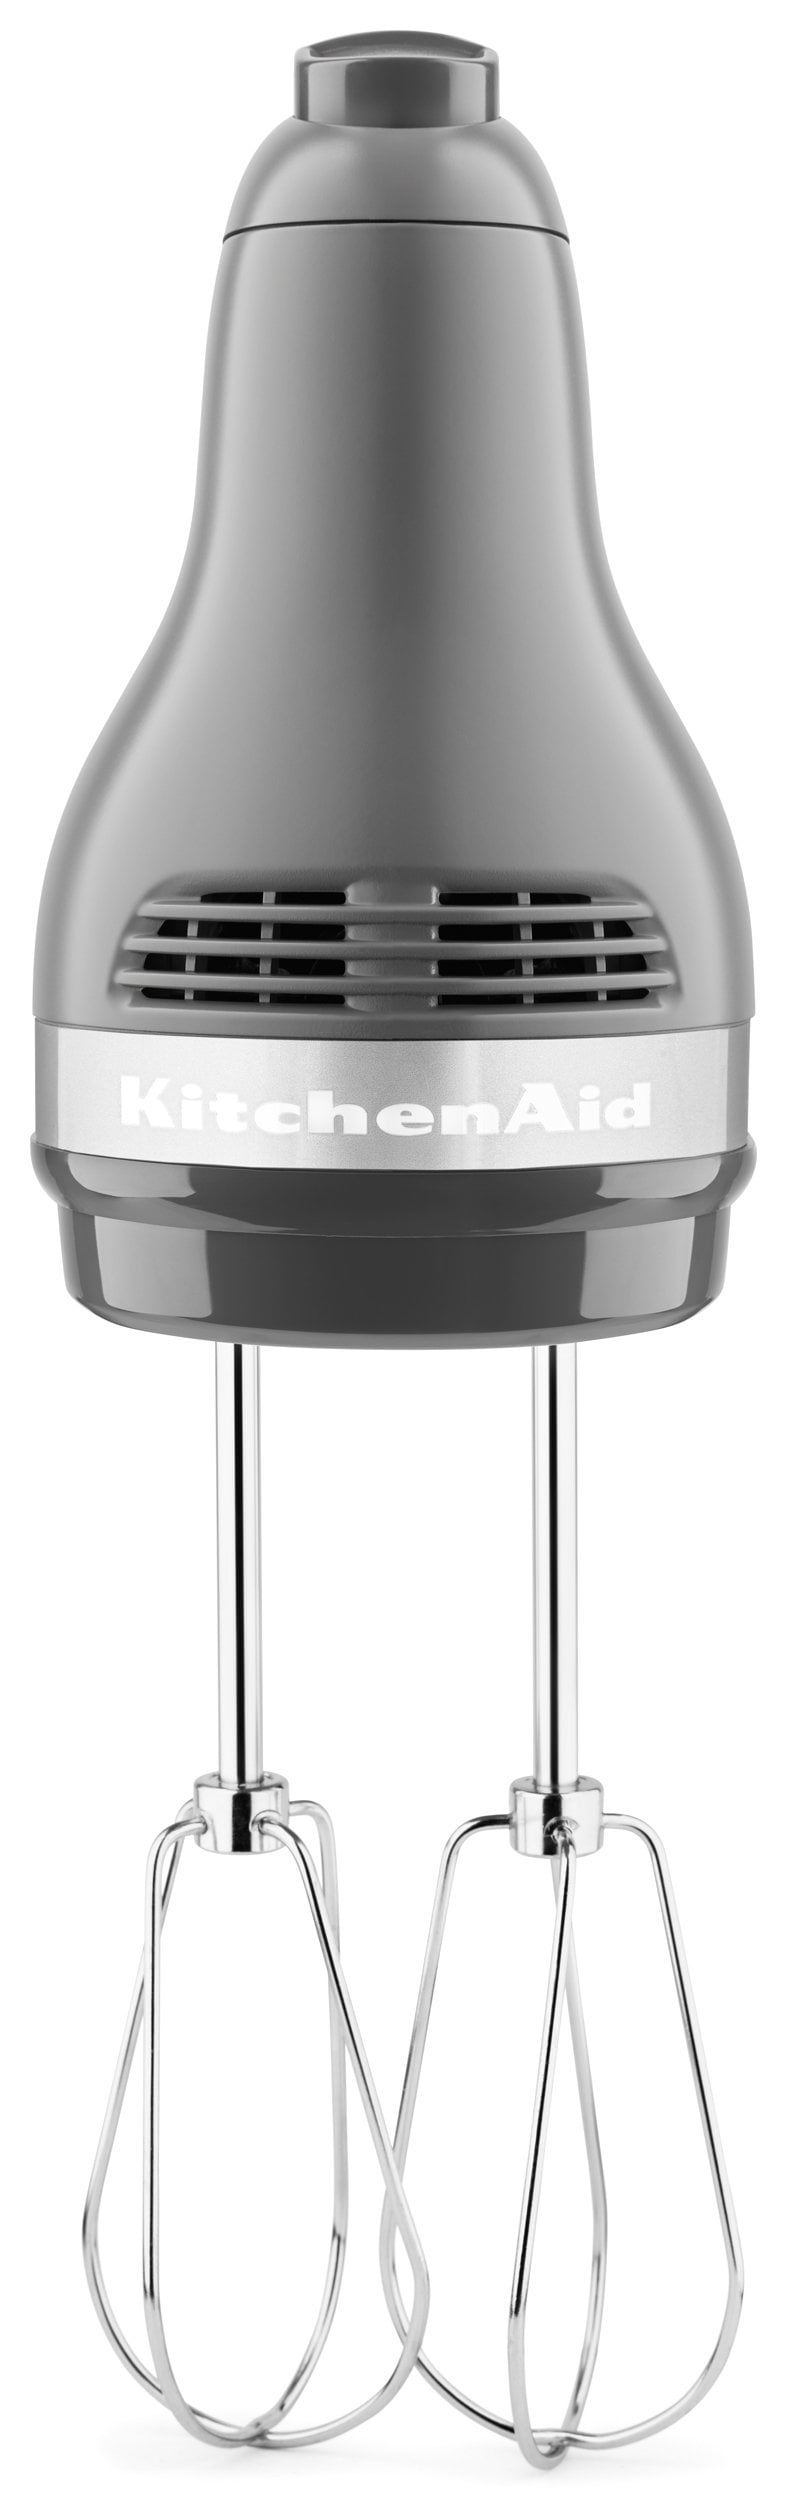 KitchenAid 5-Speed Ultra Power Hand Mixer